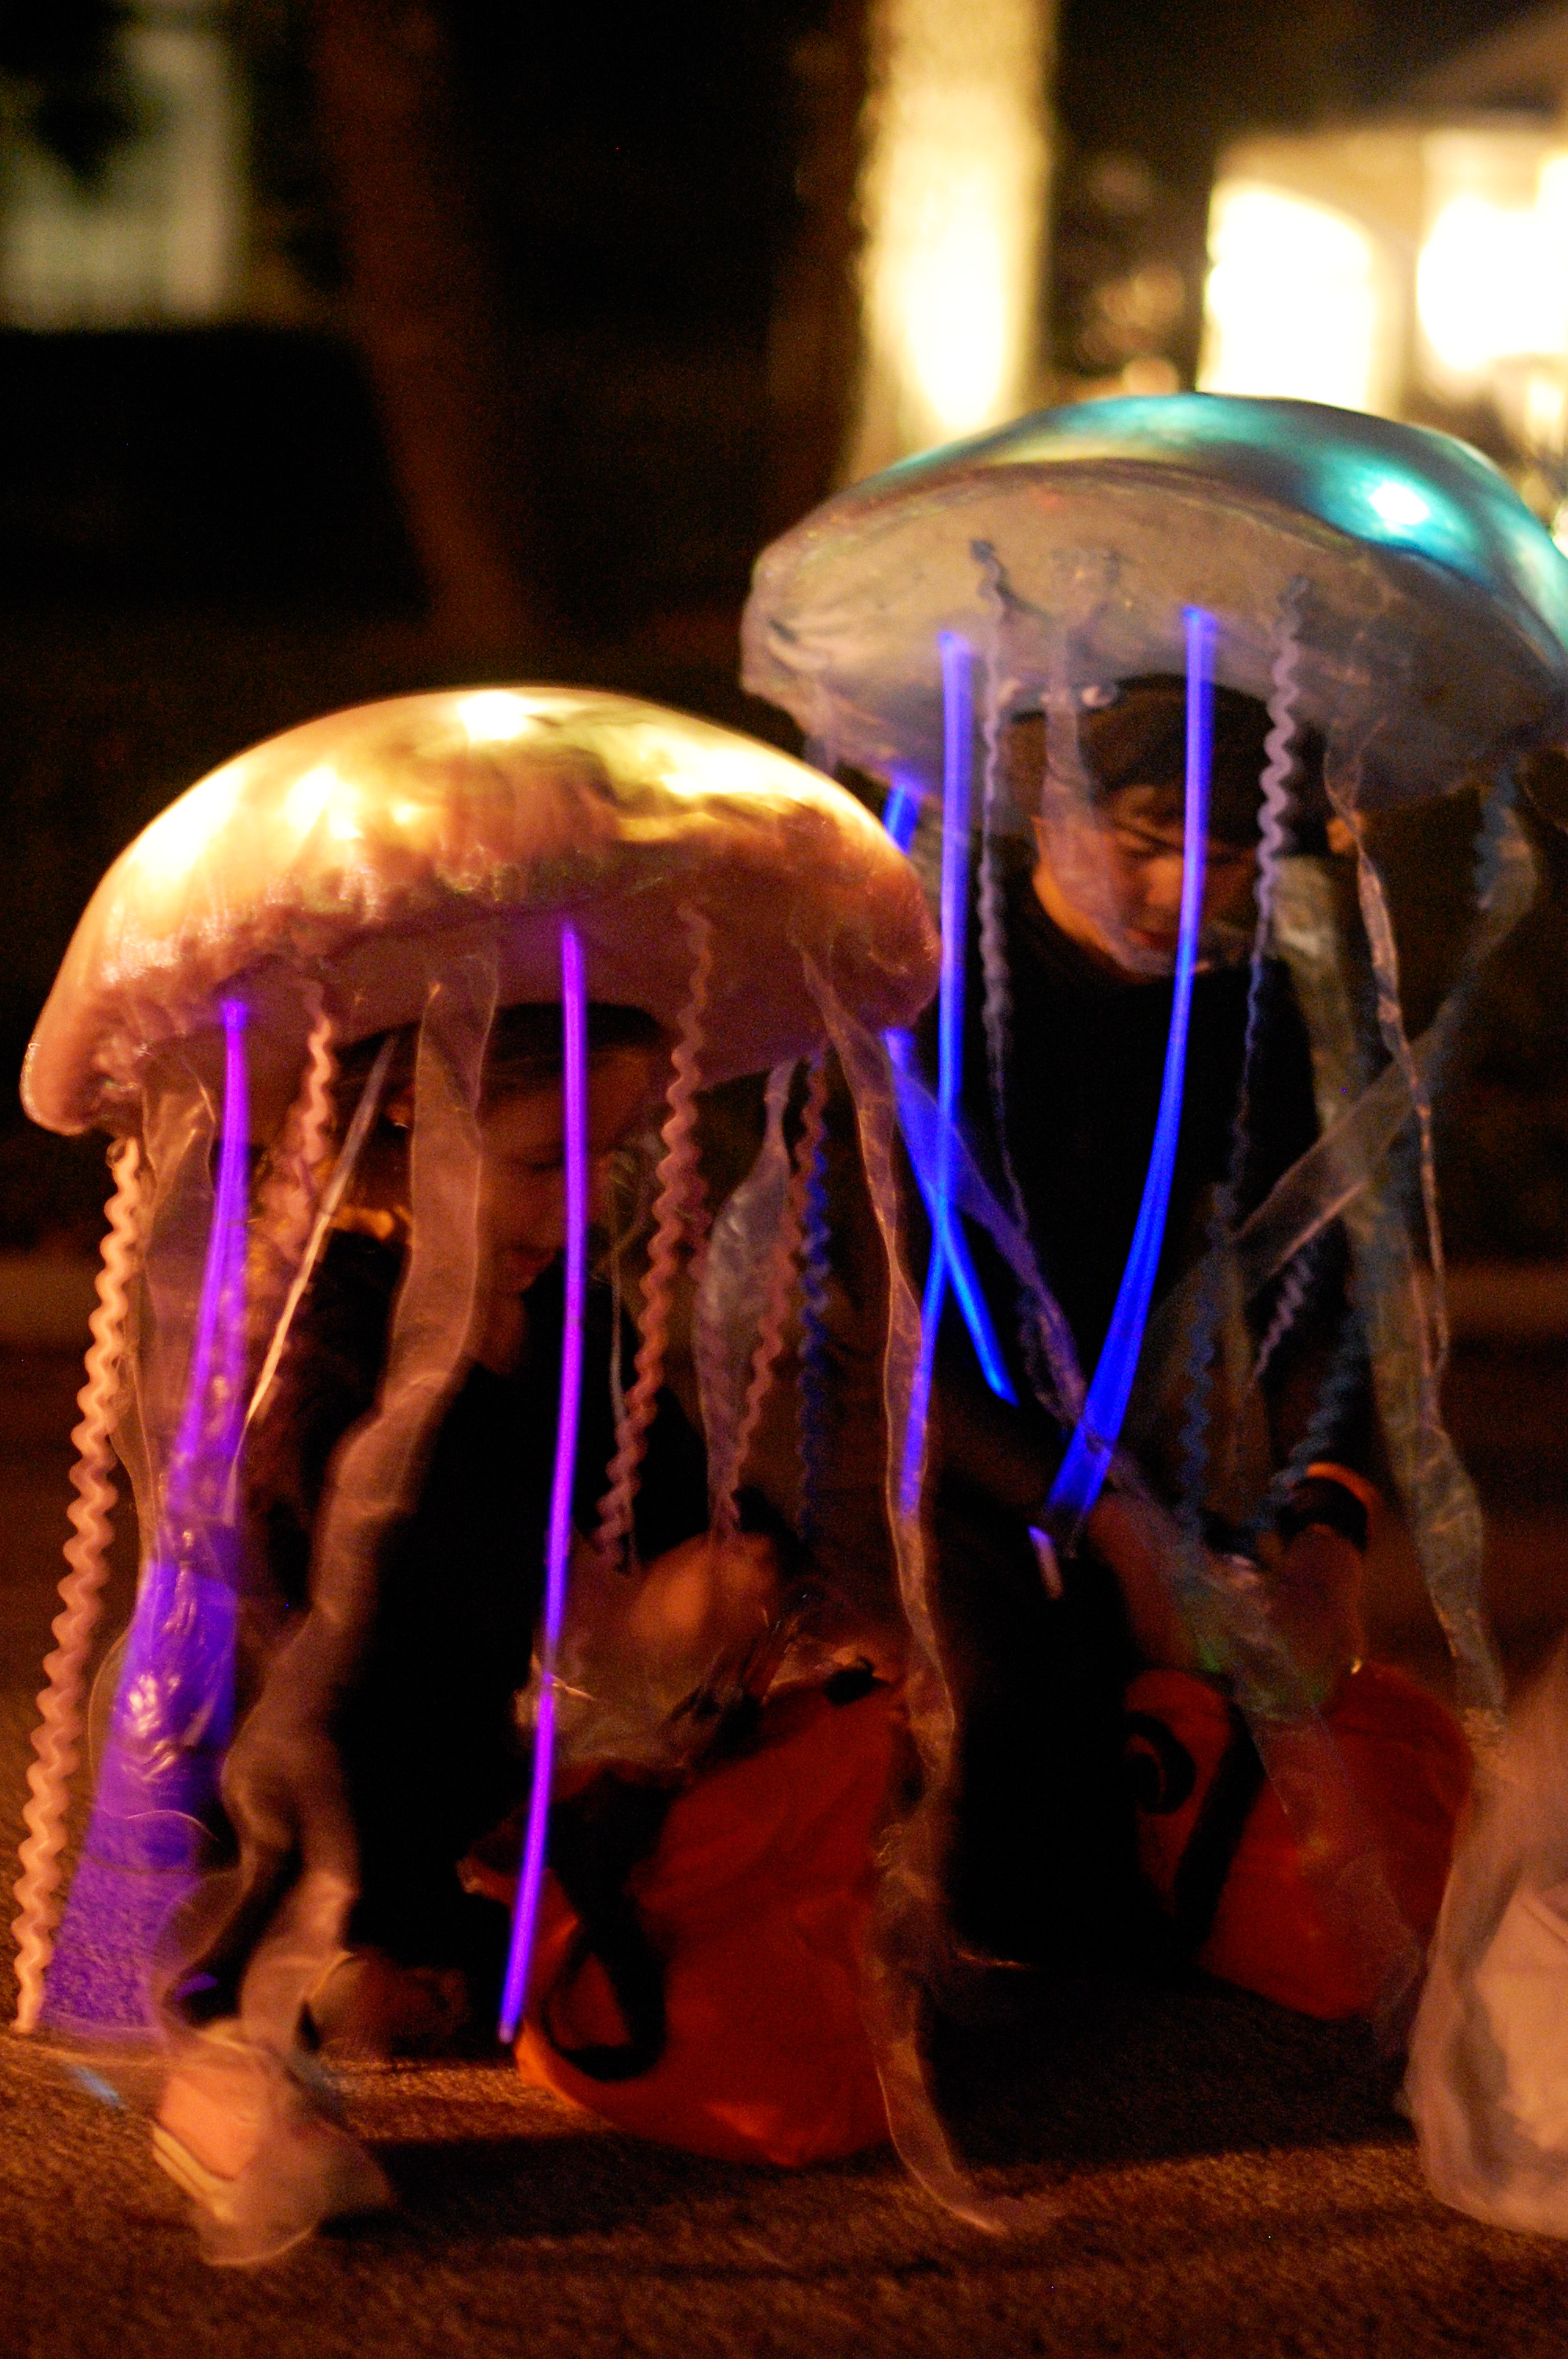 Glow in the dark diy jellyfish costume tutorial - Swoodson Says